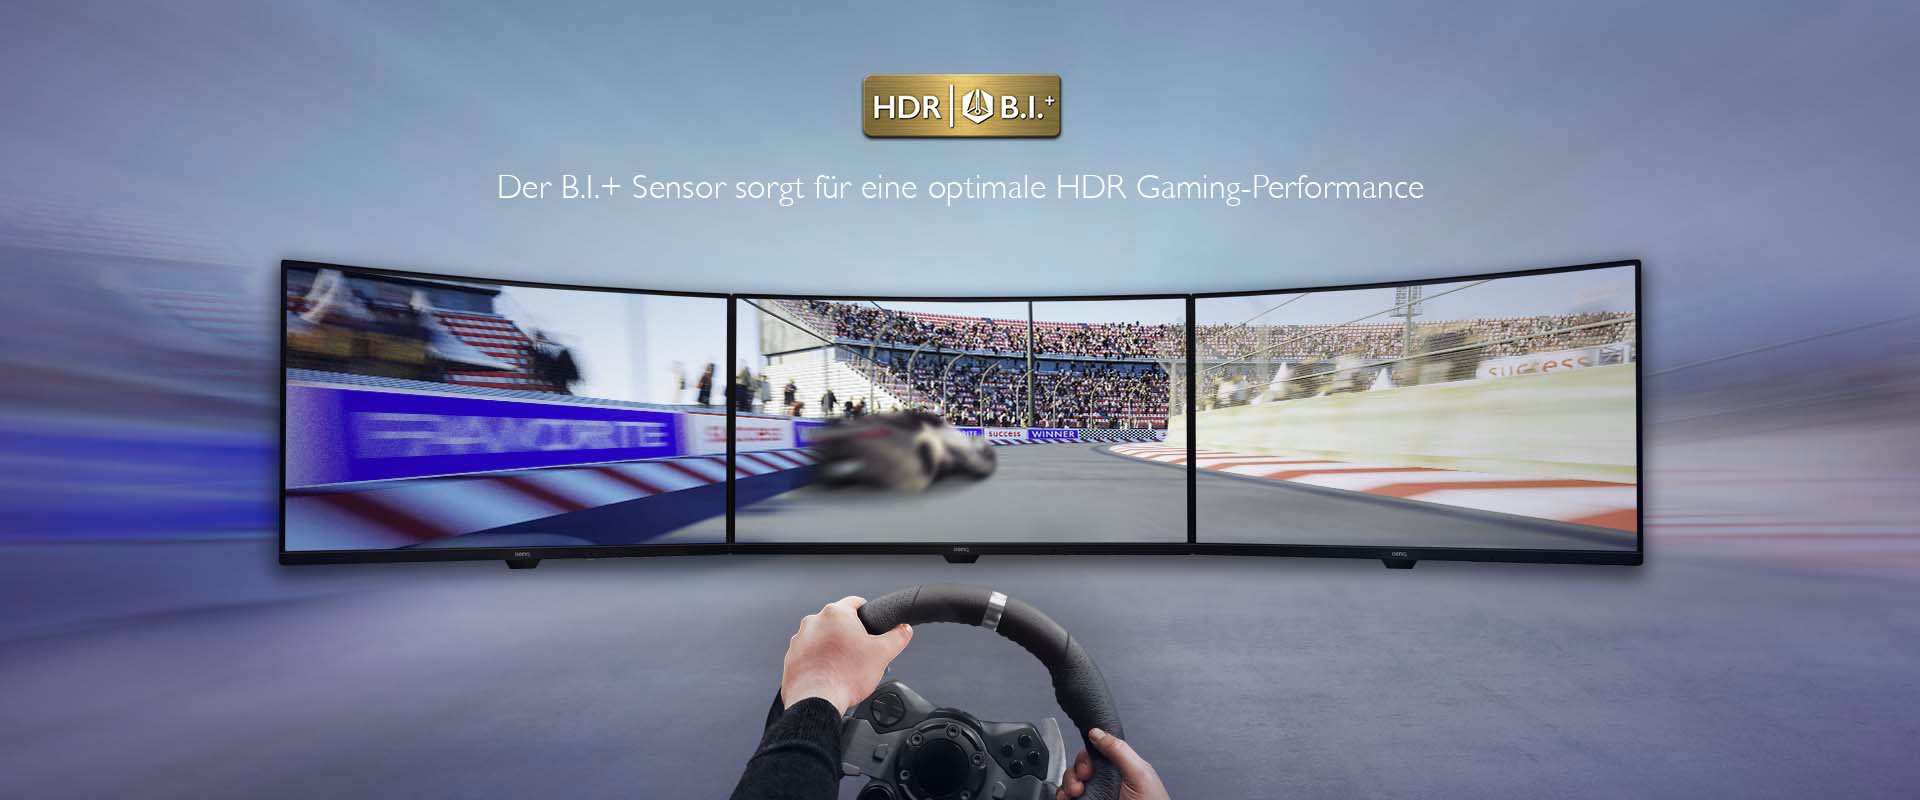 Der B.I.+ Sensor sorgt für eine optimale HDR Gaming-Performance